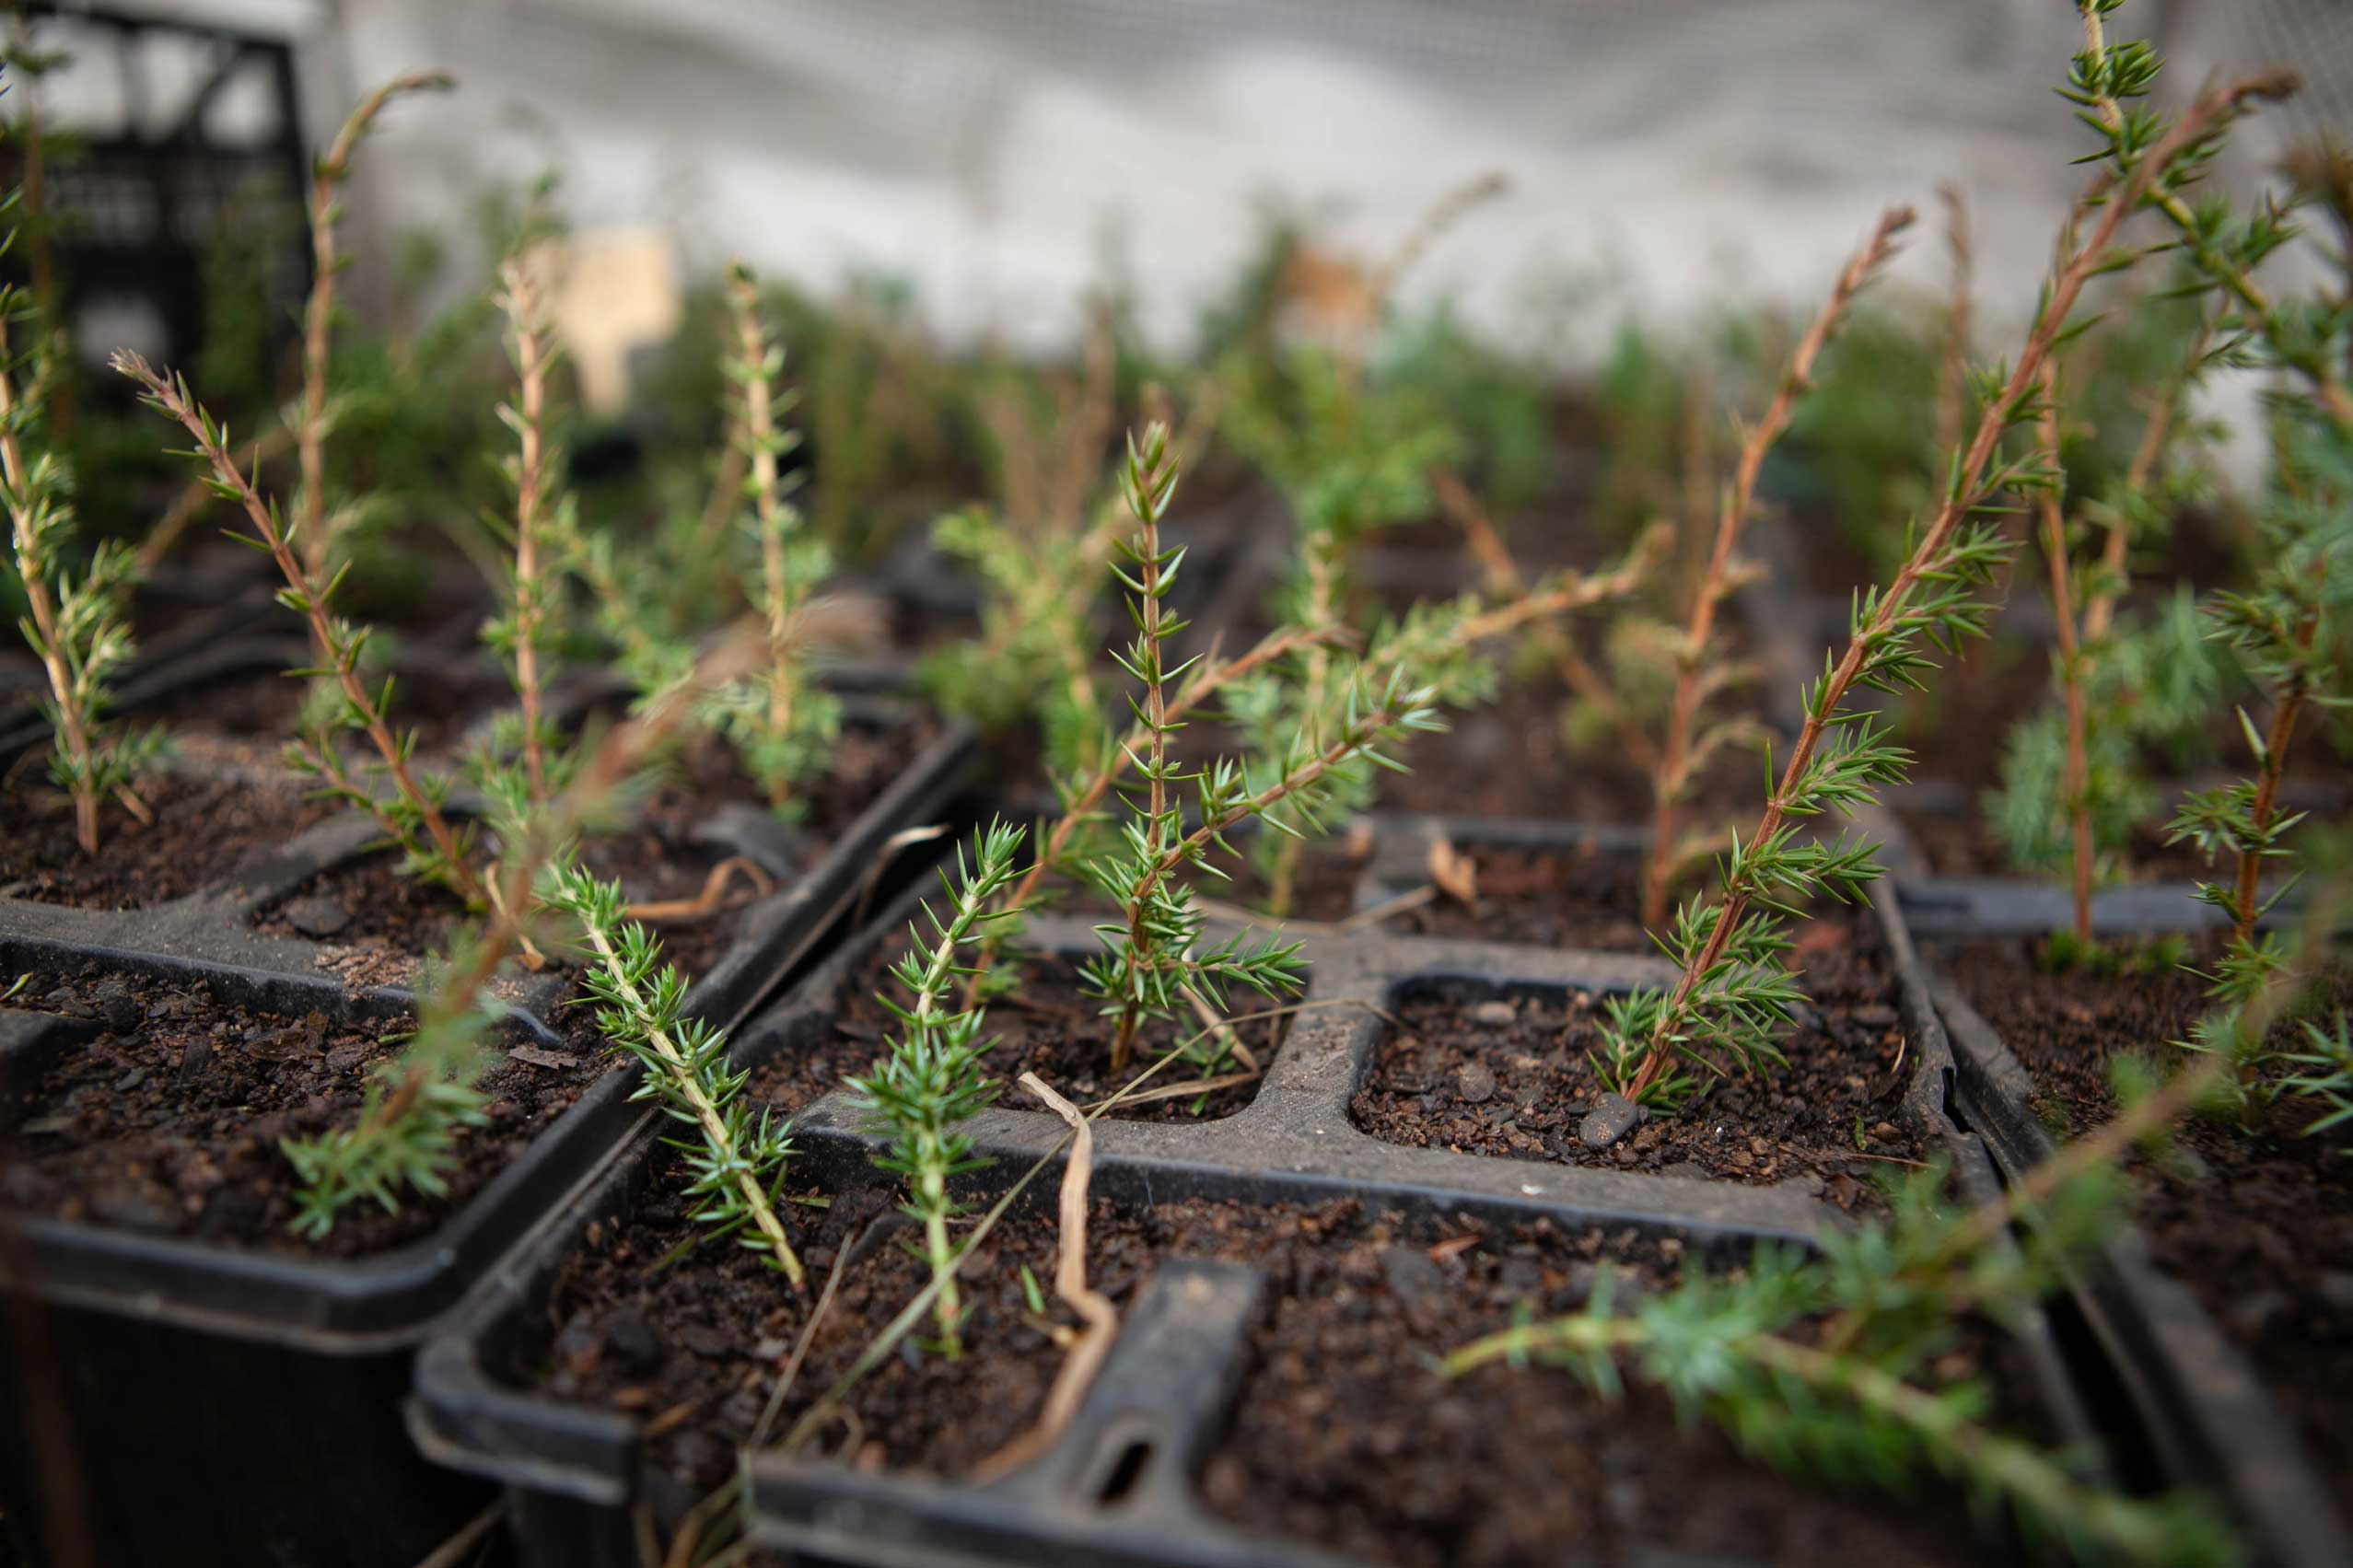 Close up of young juniper saplings in a plastic pot. Credit Charlie Fox.